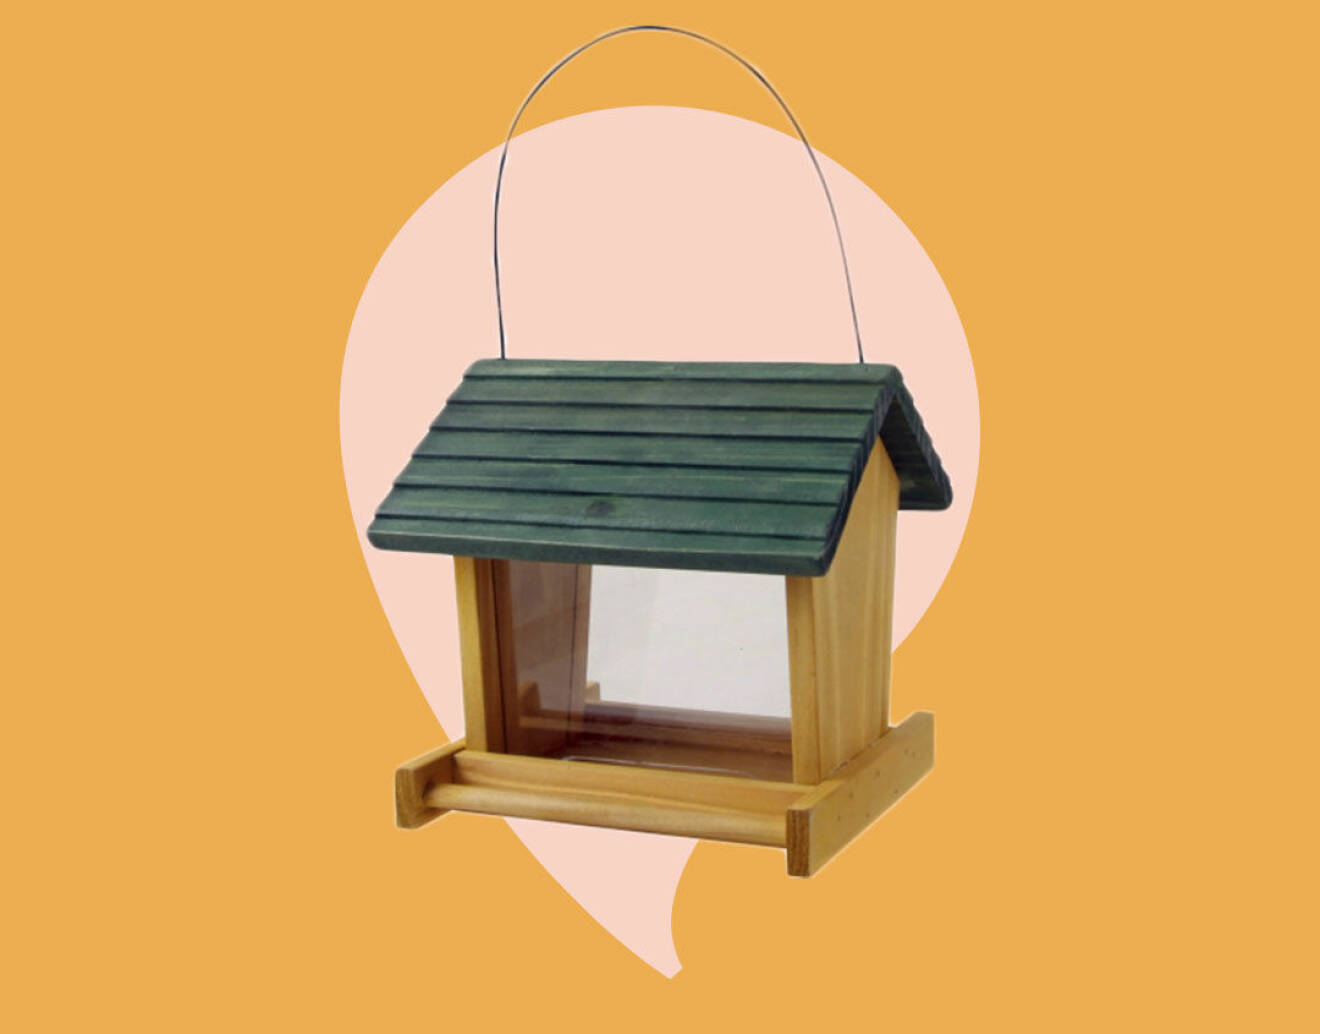 Fågelmatare som ser ut som ett litet hus